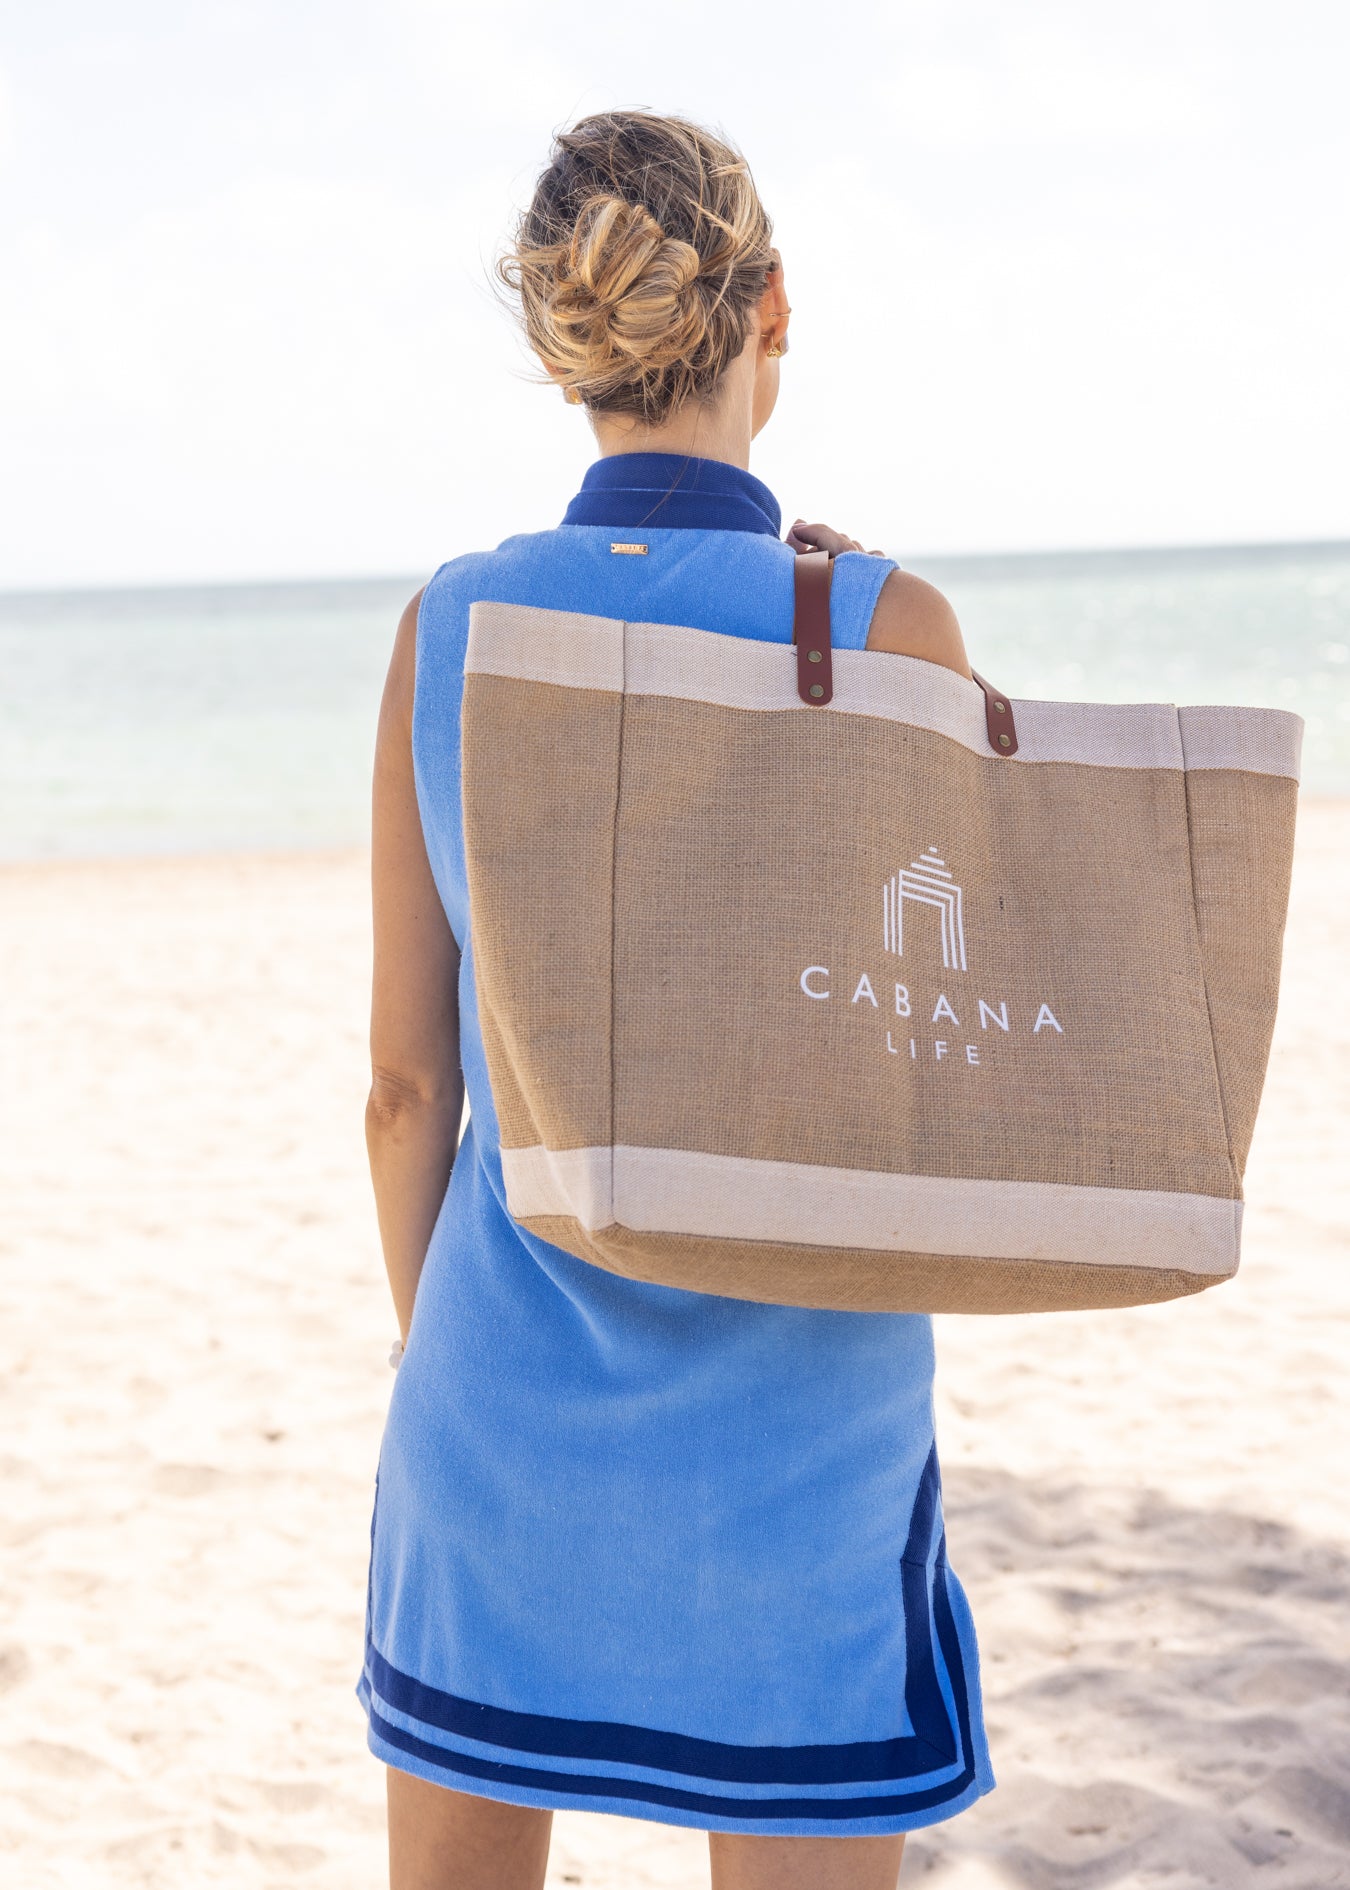 Woman holding Woman holding White Cabana Life Beach Bag on beach